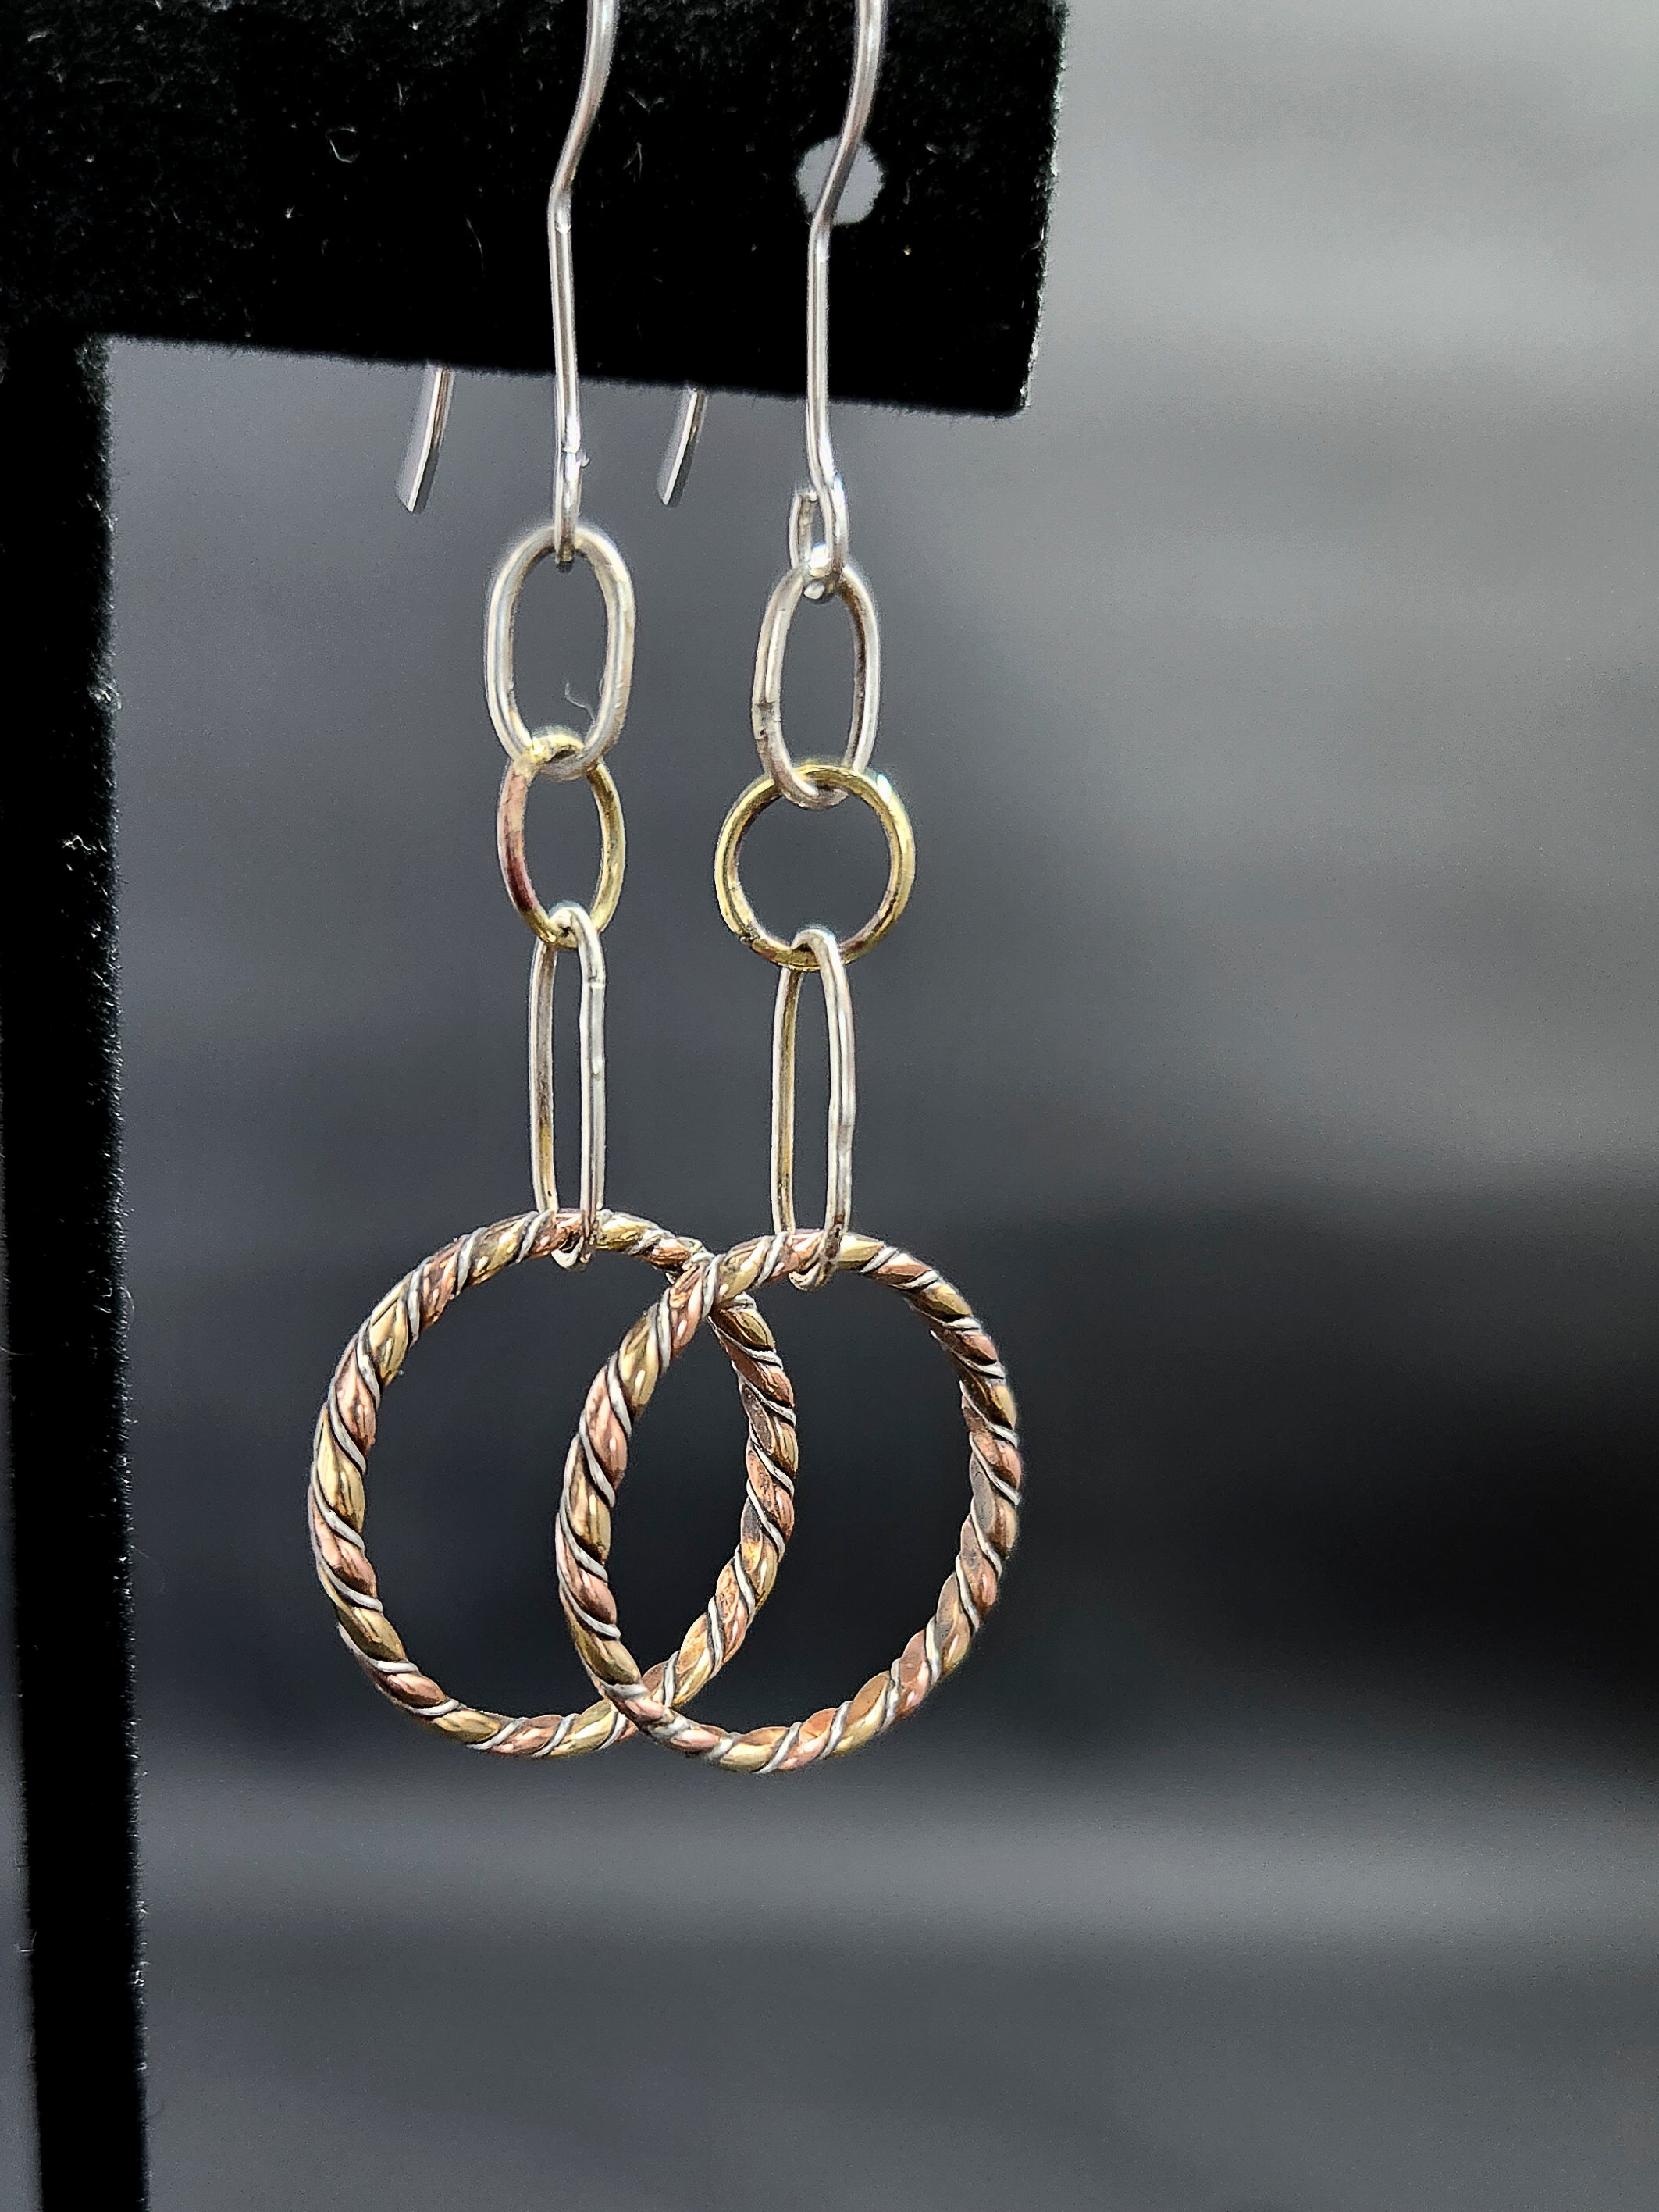 Twister Wire Ring Dangle Earrings Coppe, Brass, Sterling